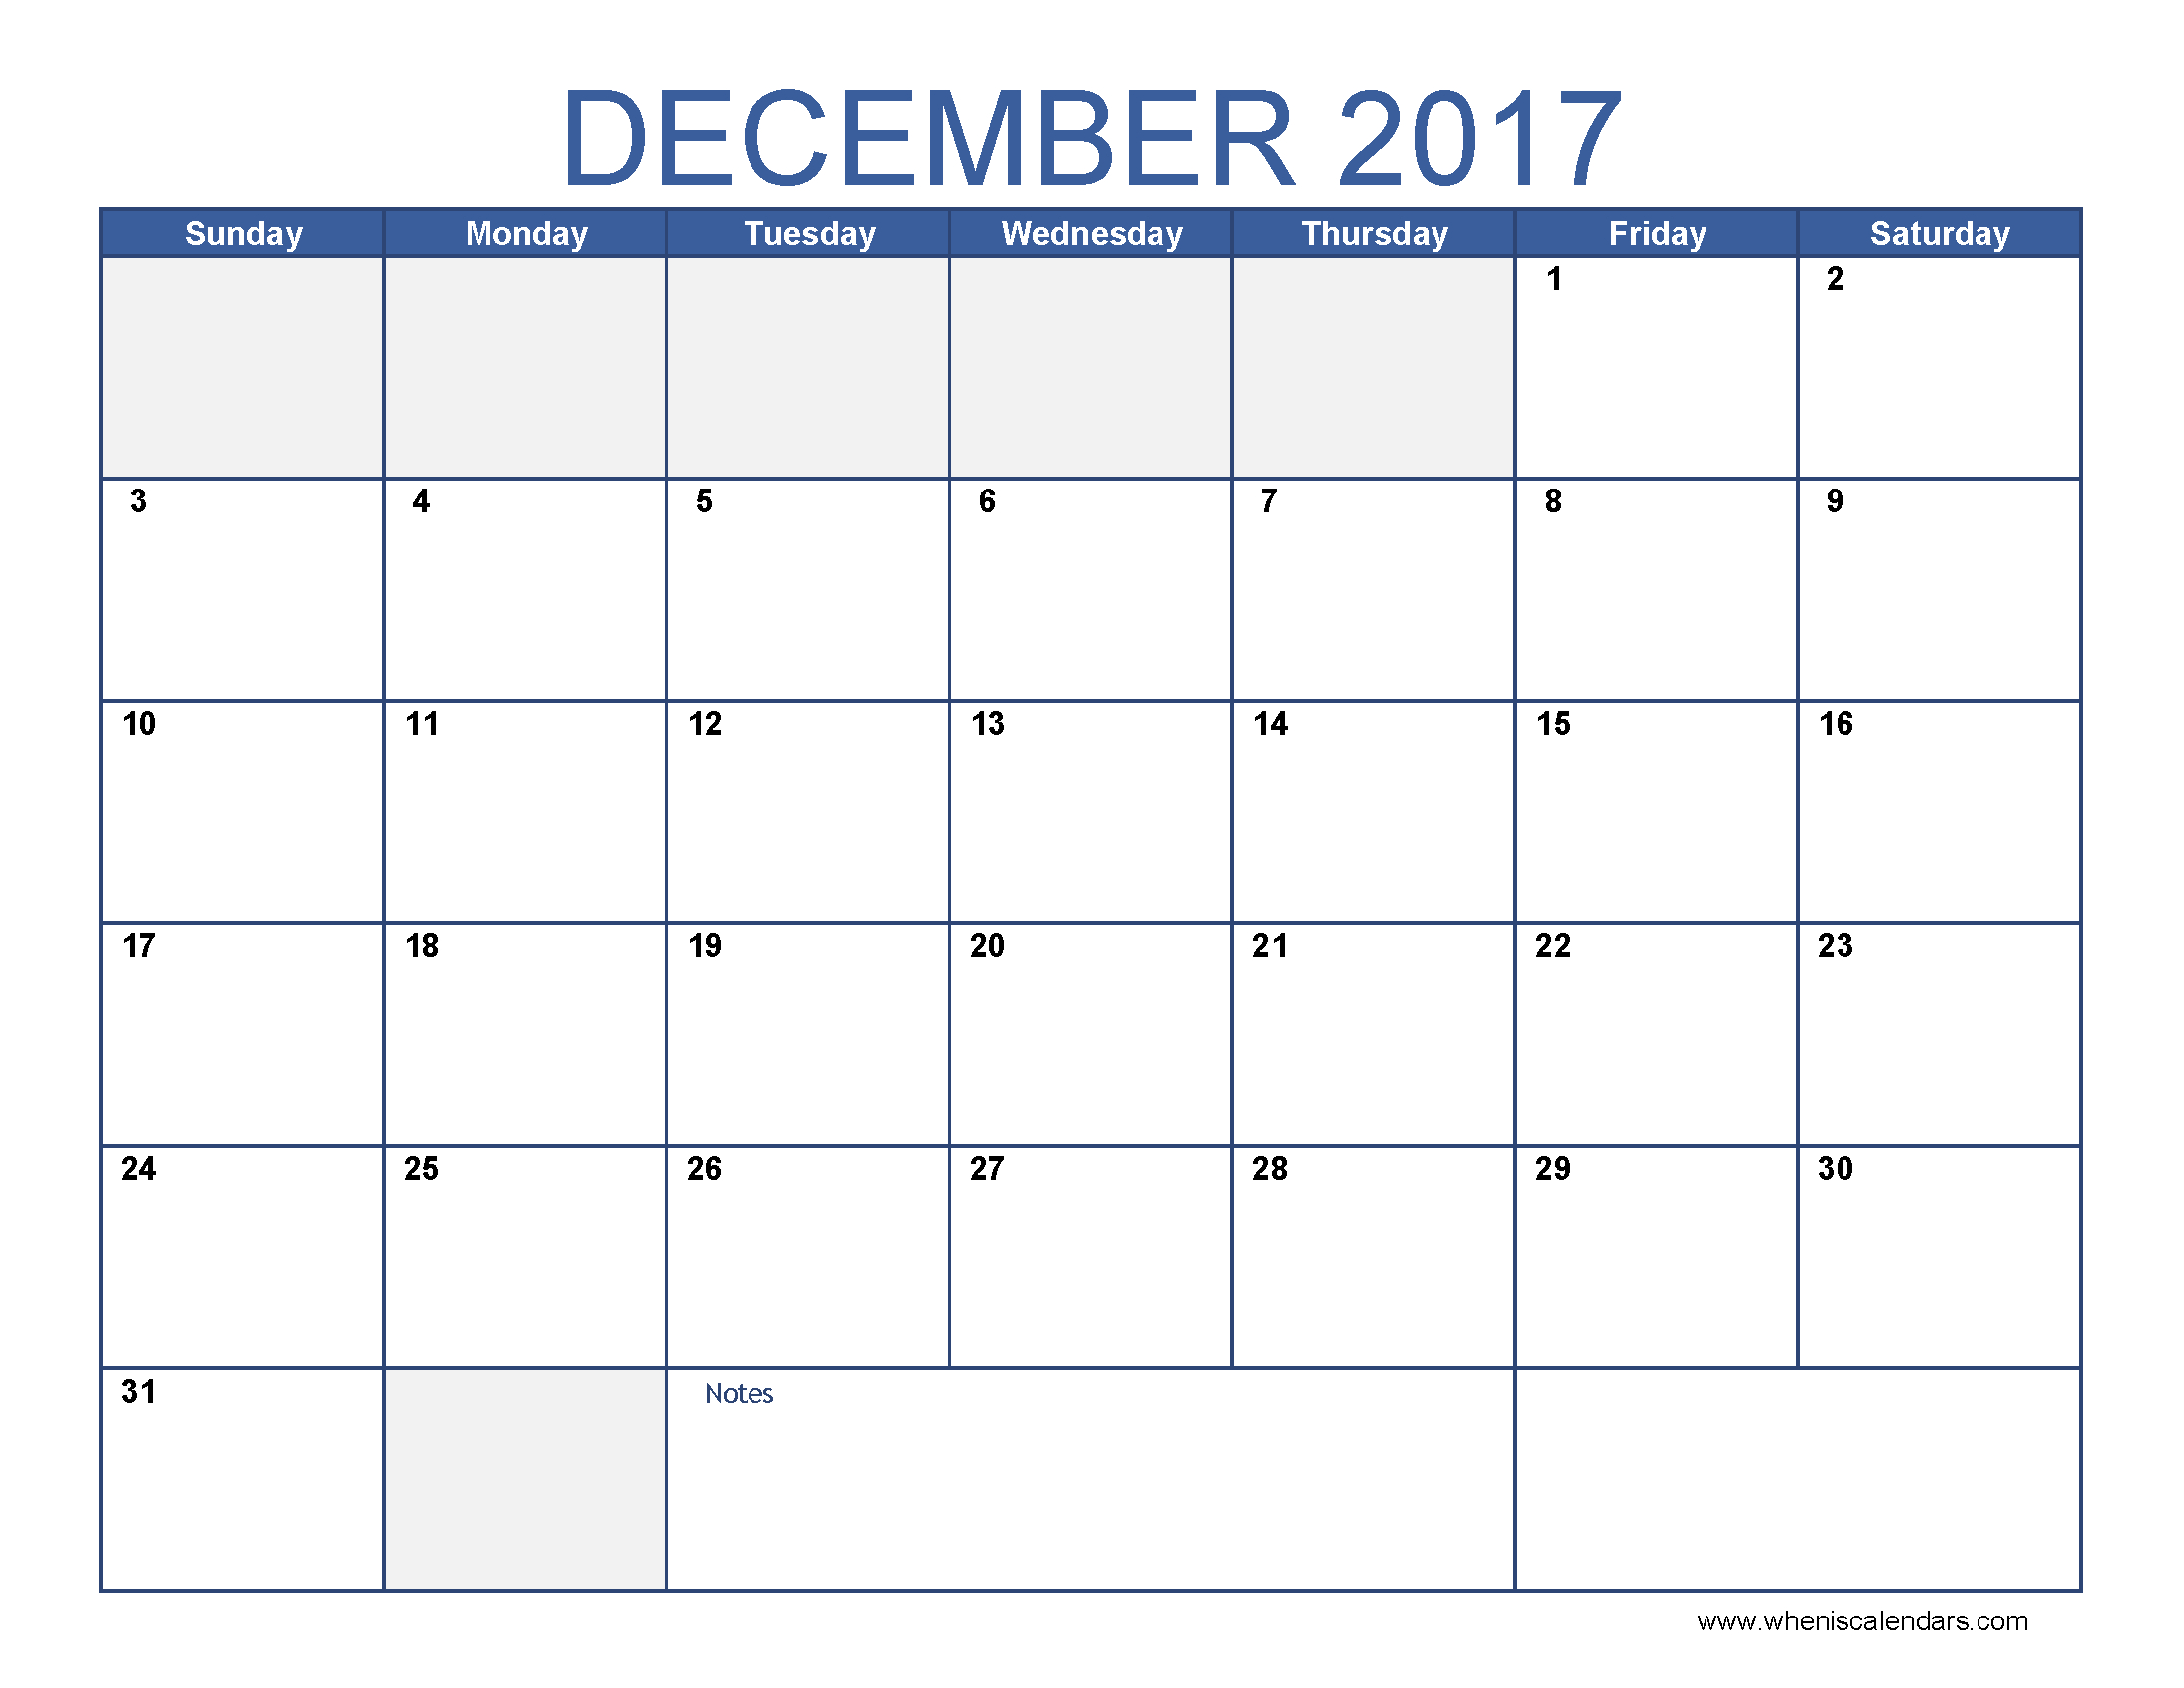 Free Printable 2017 December Calendar | Max Calendars intended for December 2017 Calendar Printable